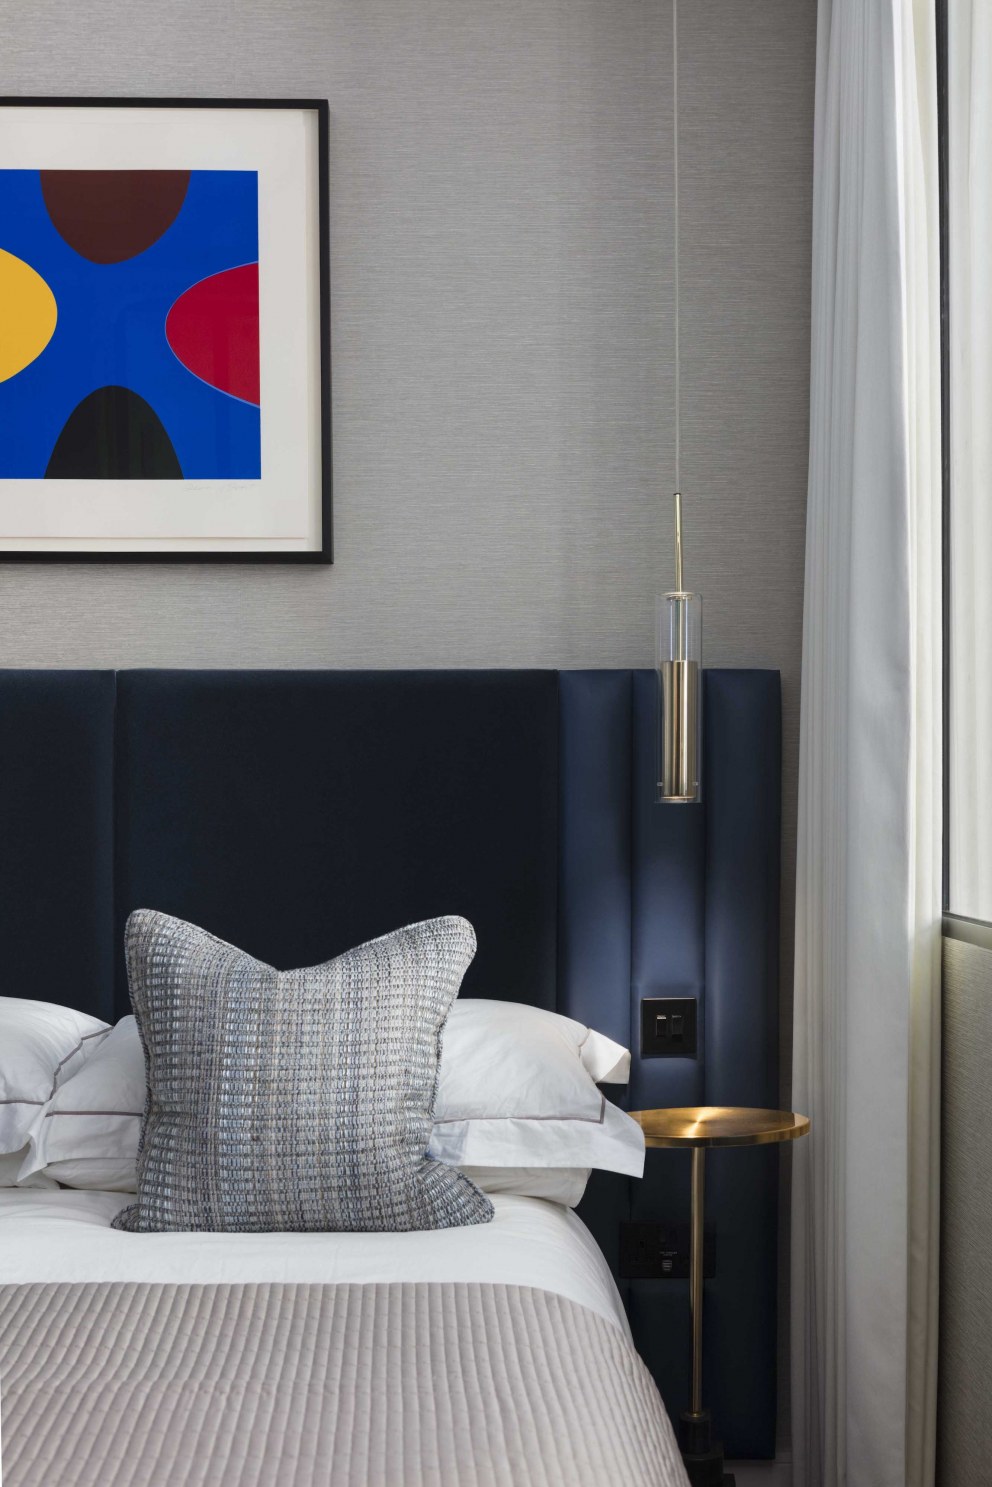 London Pied a terre  | Master Bedroom | Interior Designers